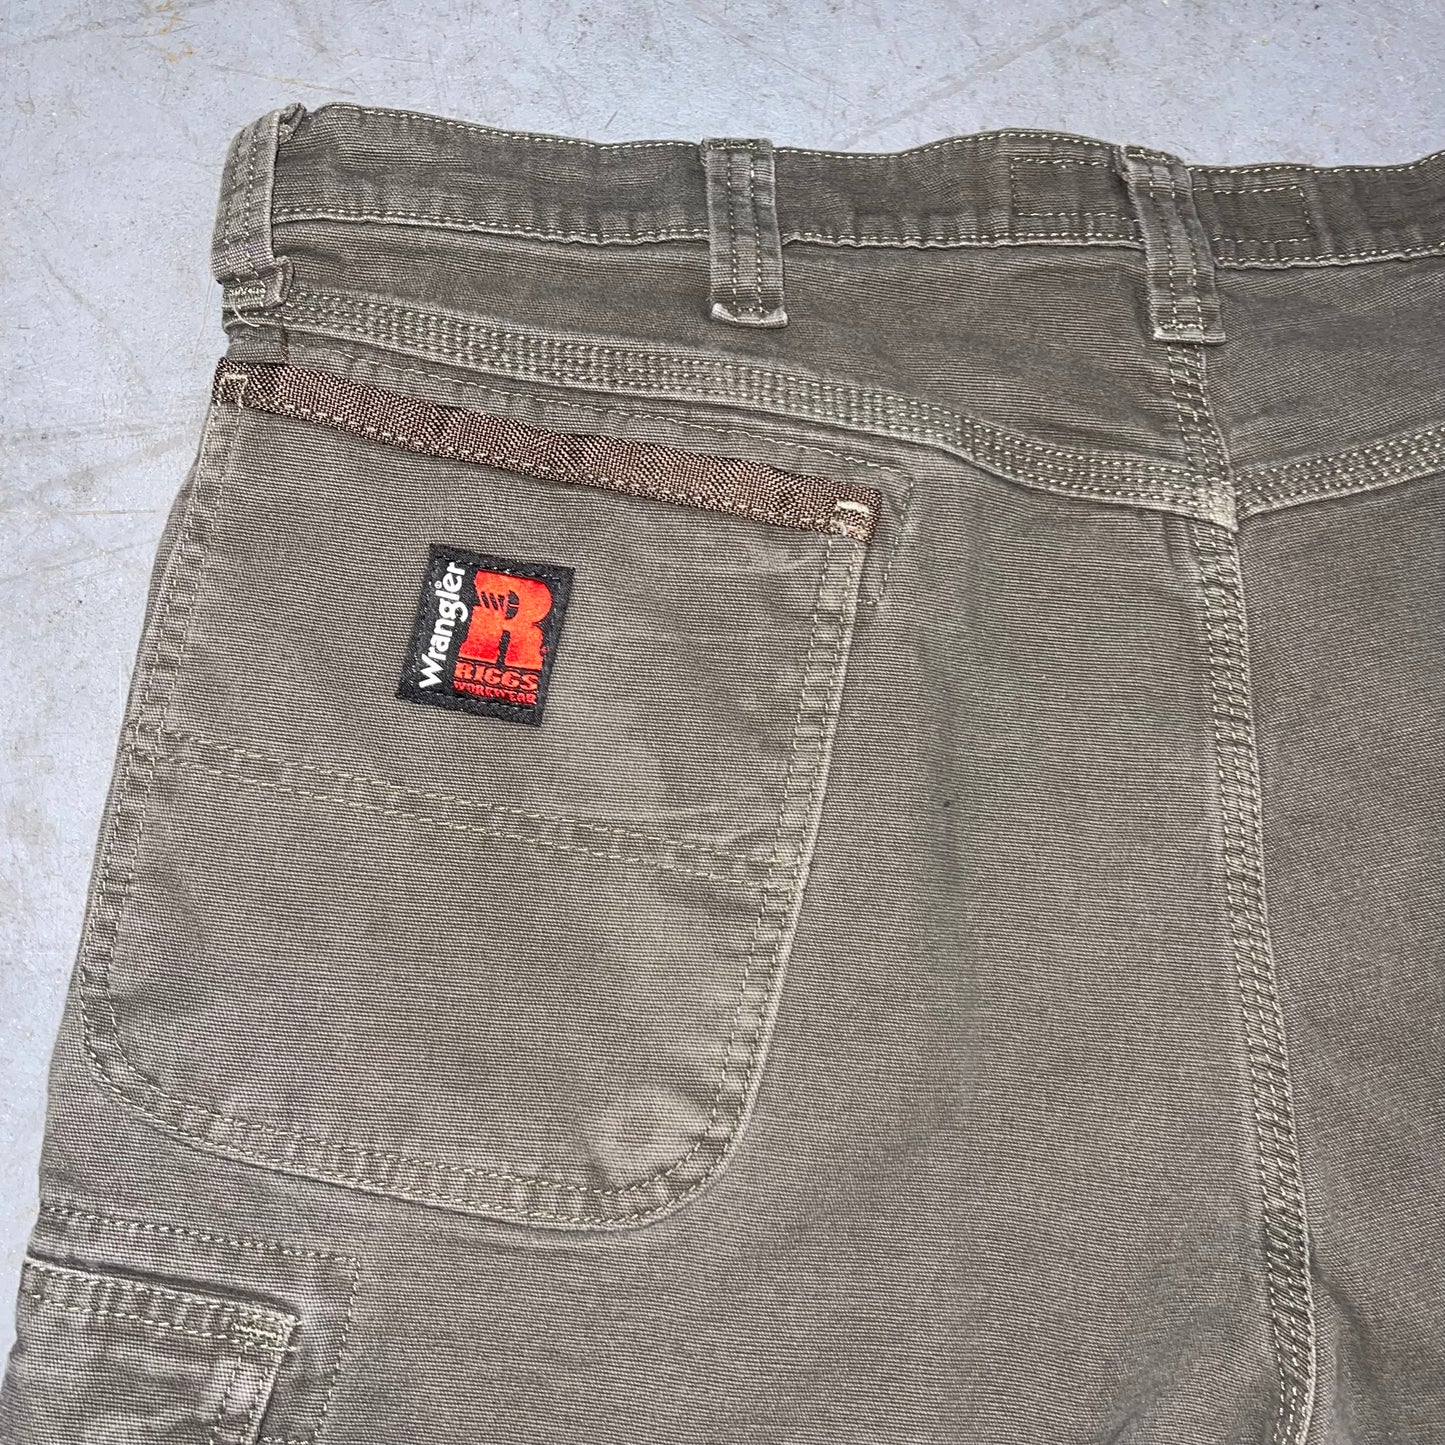 Wrangler Riggs Cargo Workwear Shorts. Size 38